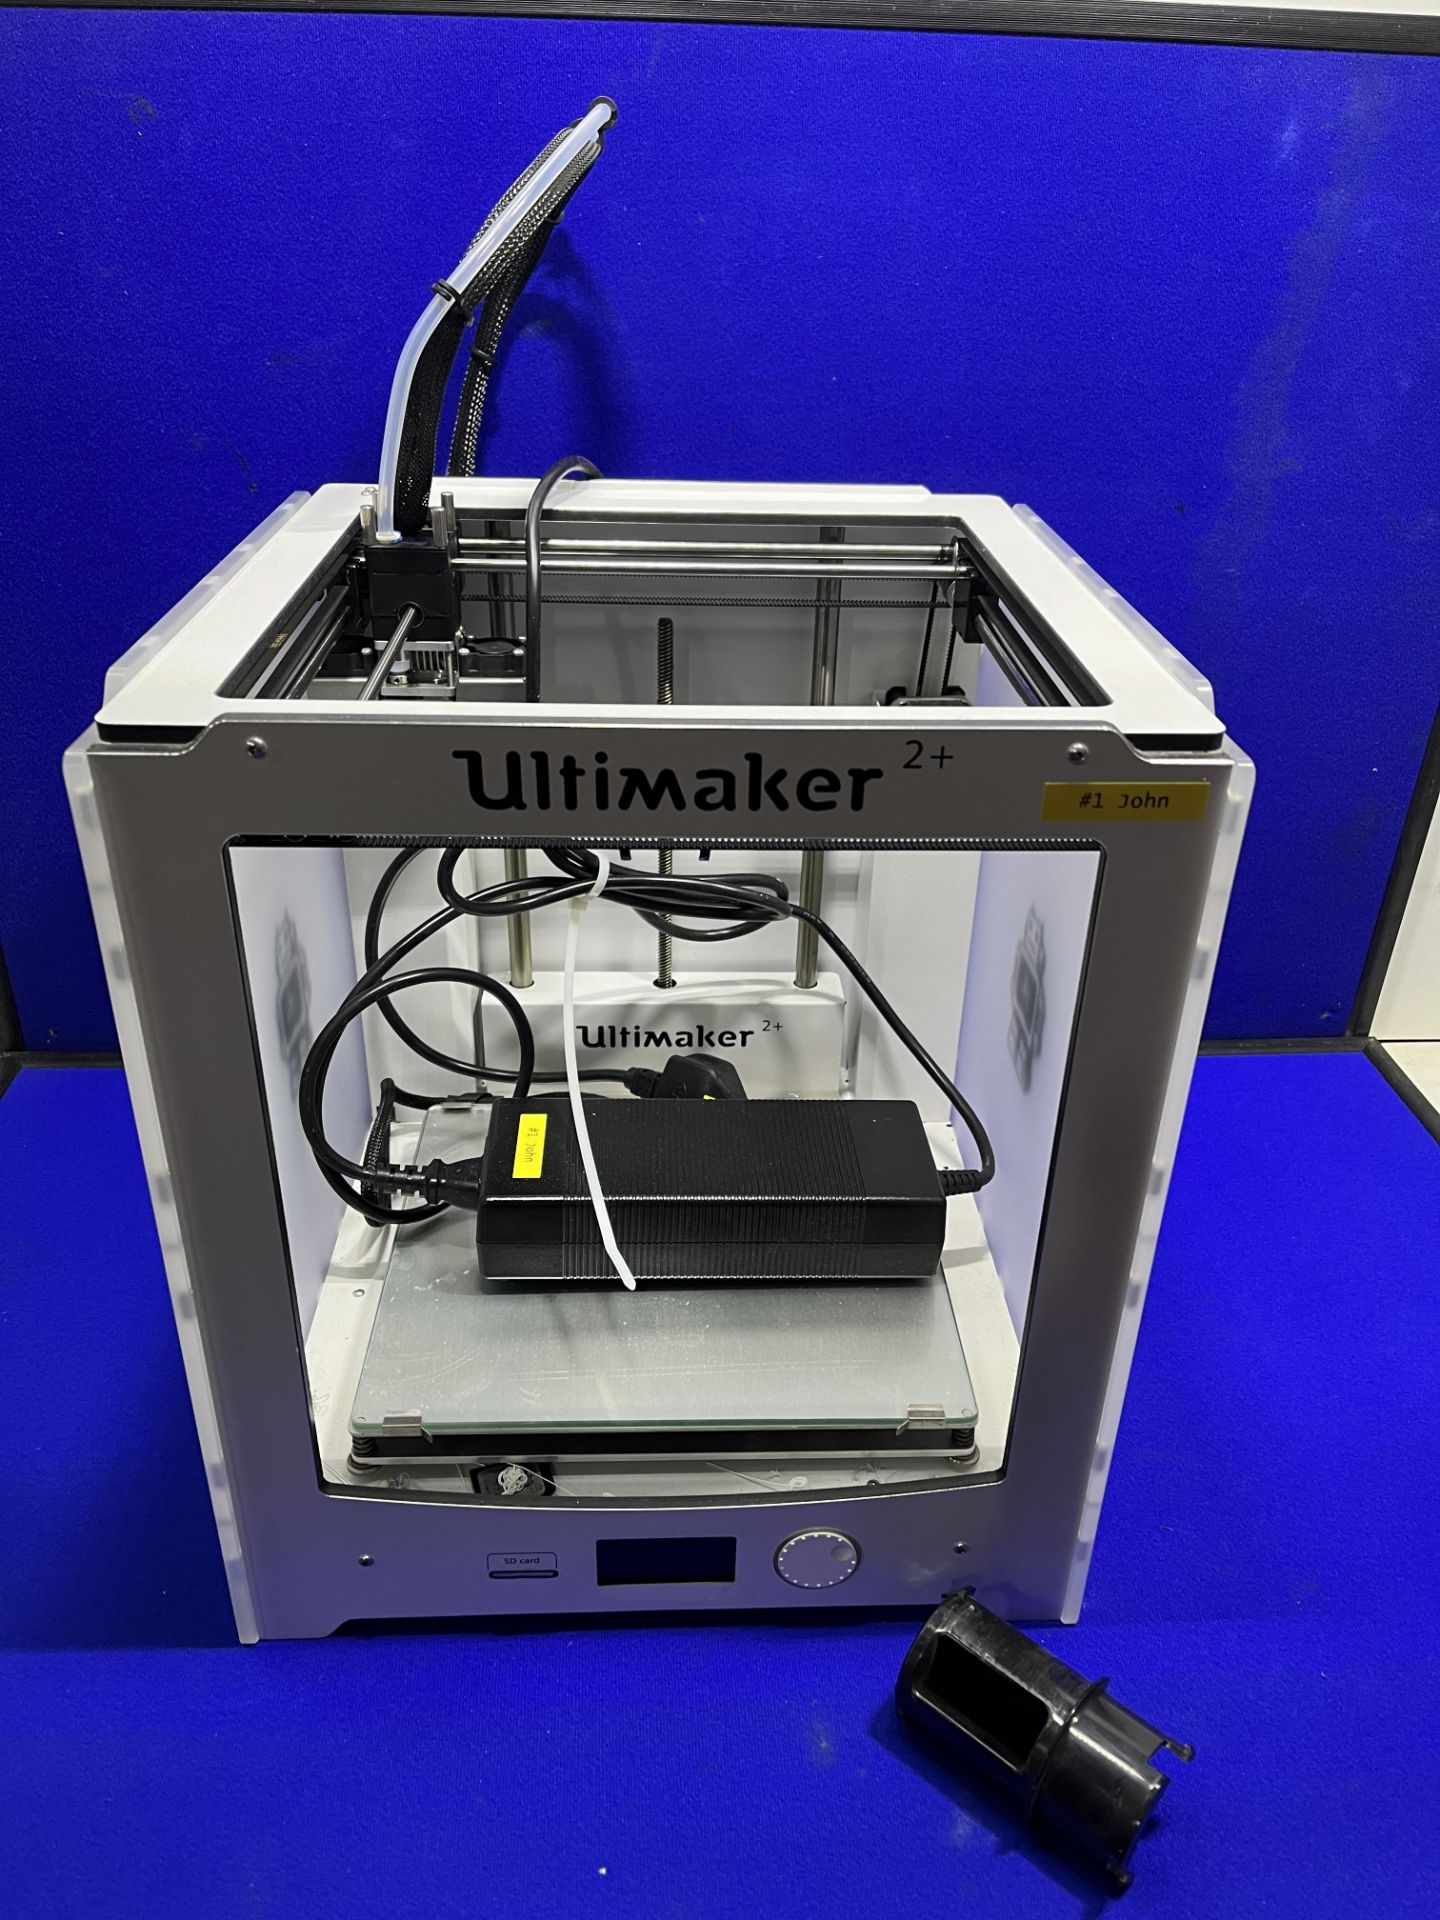 Ultimaker Model 2+ 3D printer